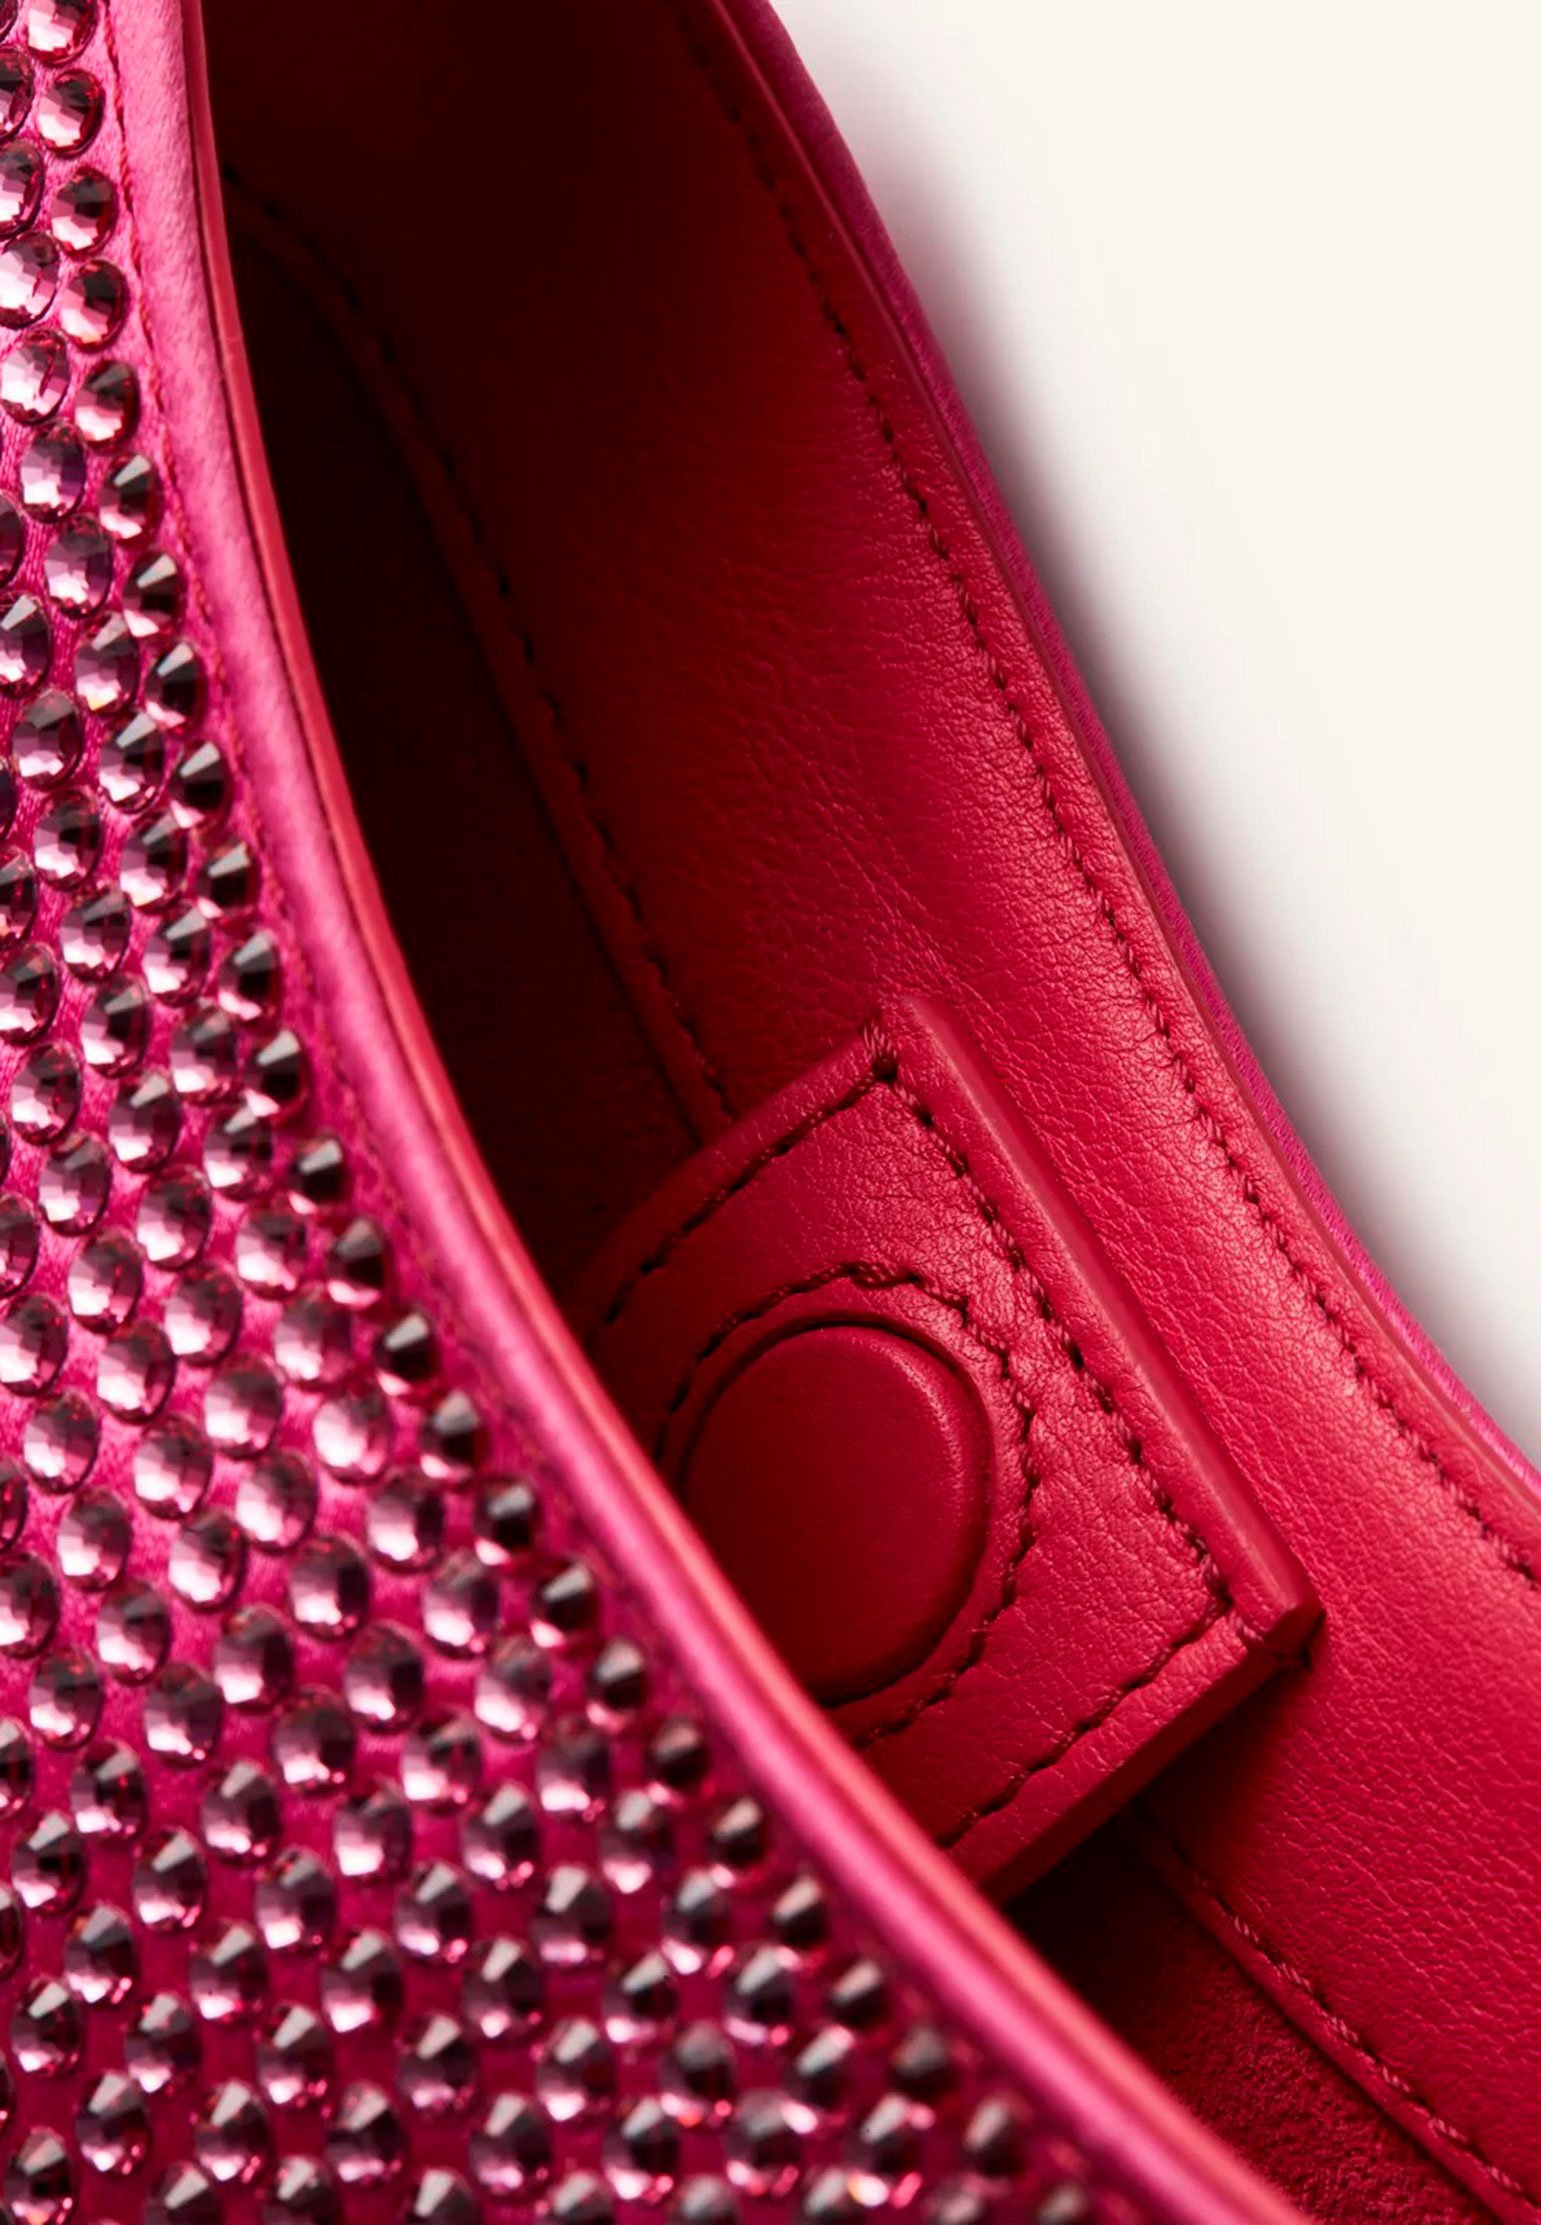 Bag MAGDA BUTRYM Color: pink (Code: 1131) in online store Allure